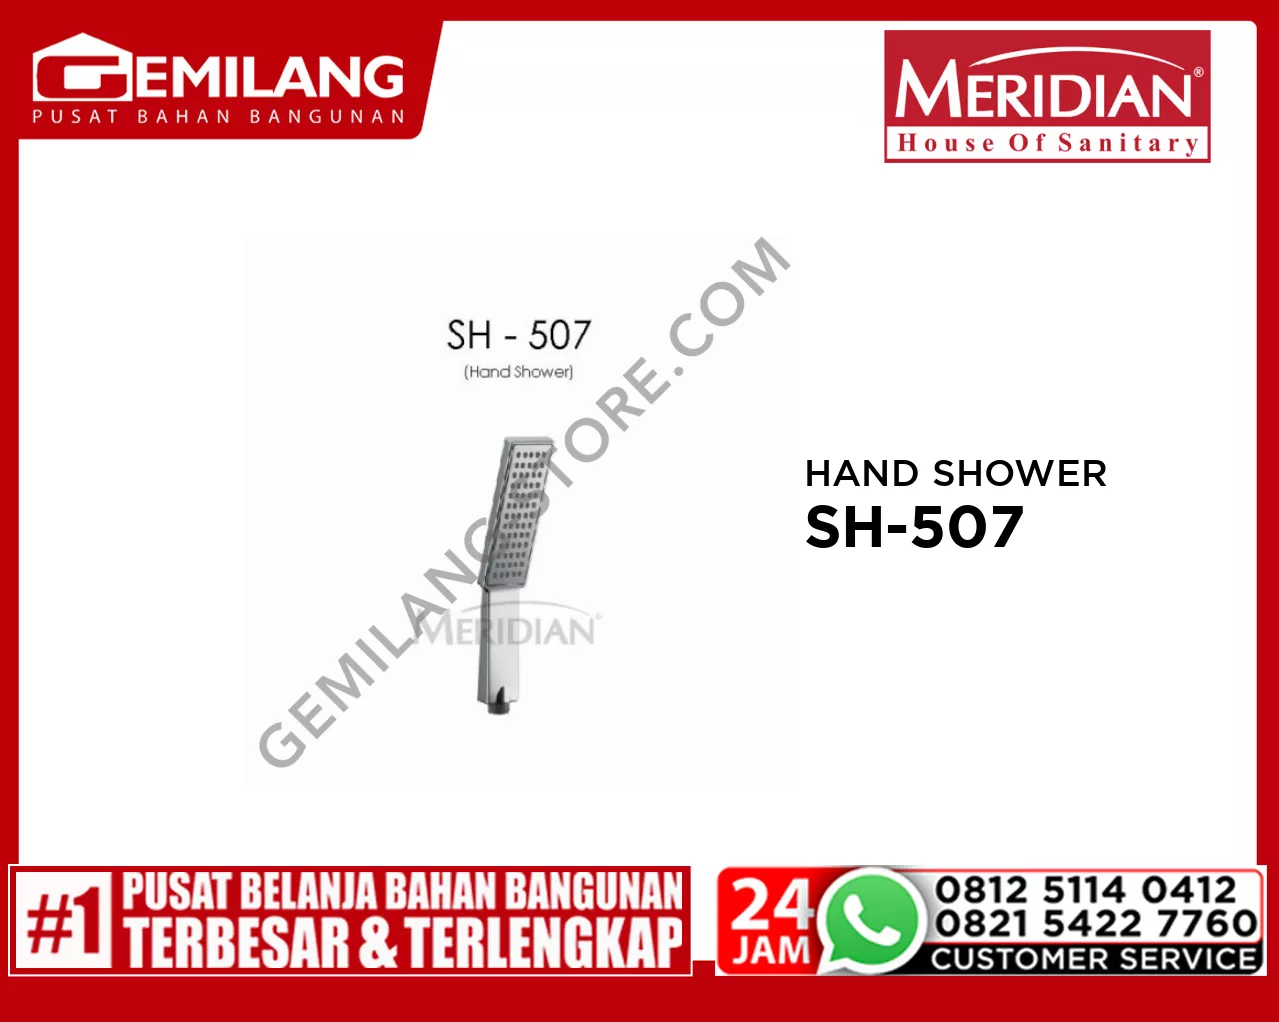 MERIDIAN HAND SHOWER SH-507